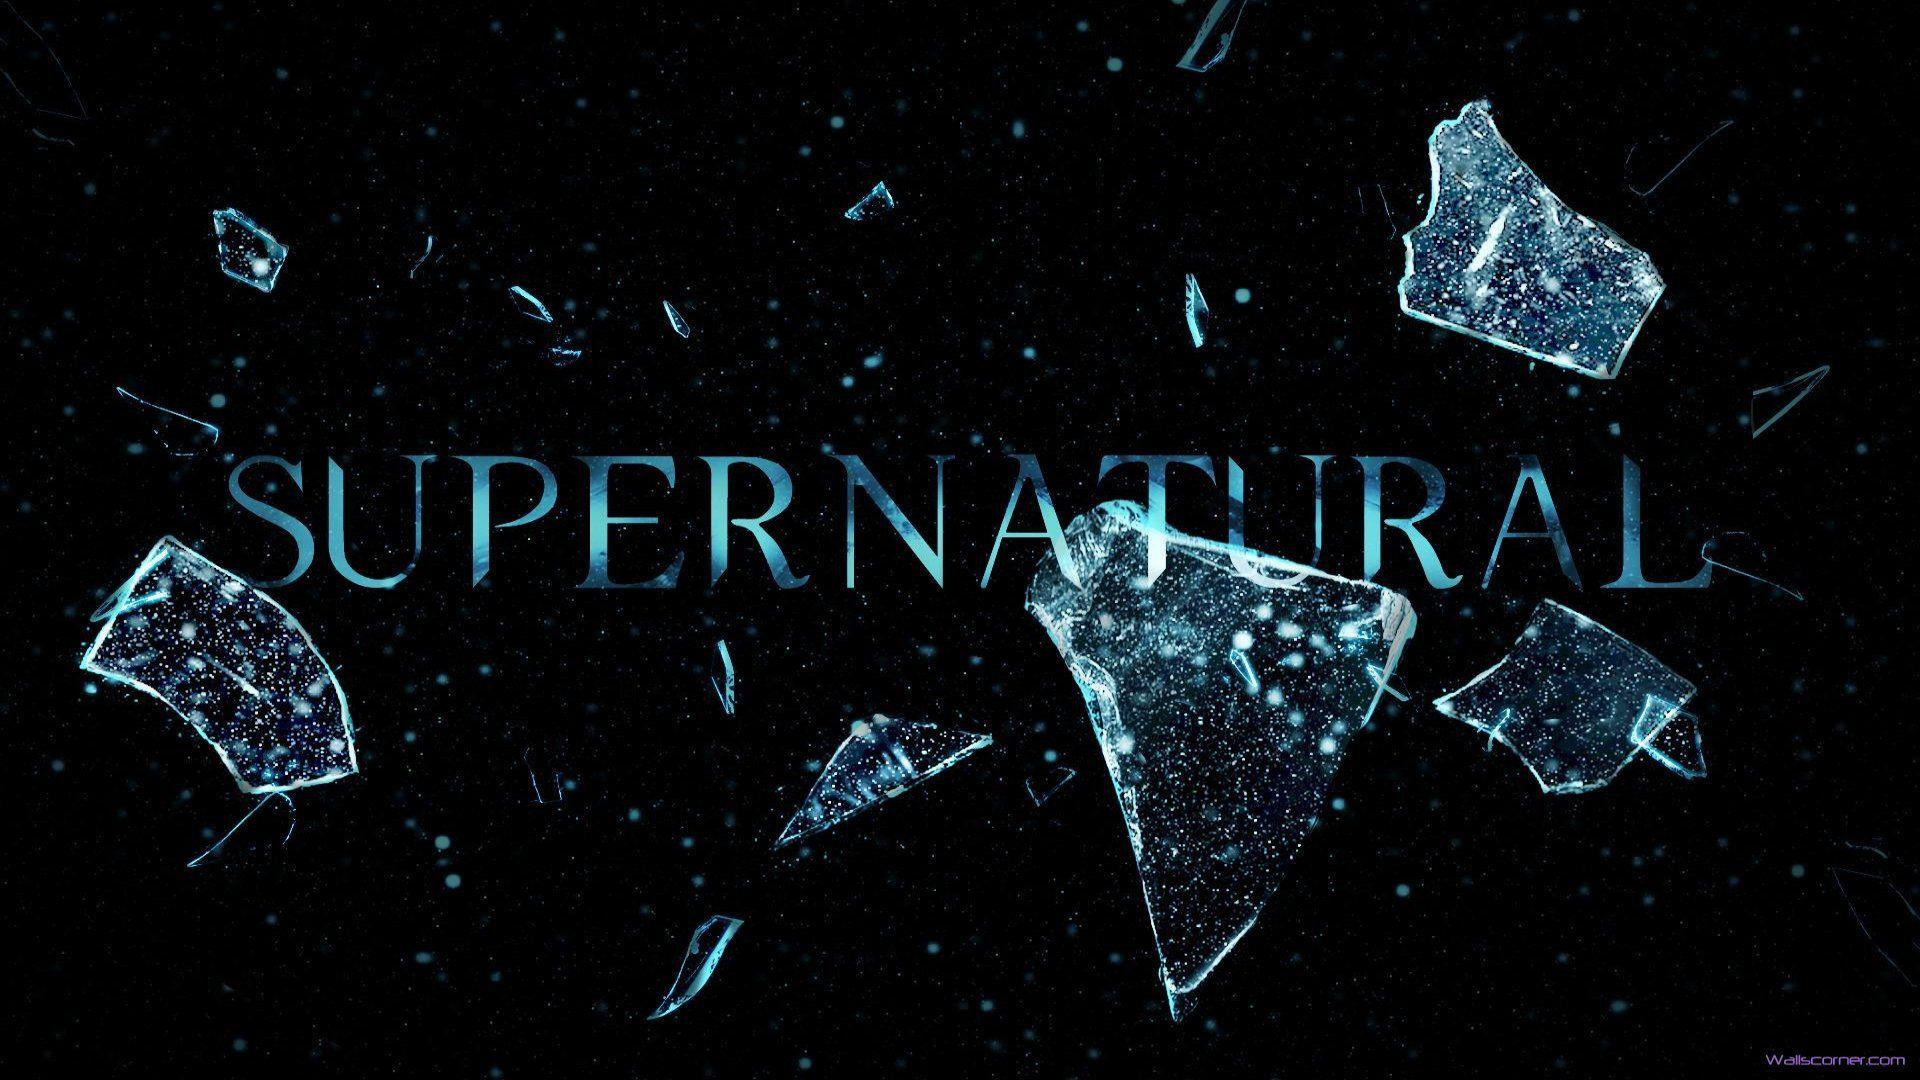 Supernatural HD wallpaper Wallpaper Download. All